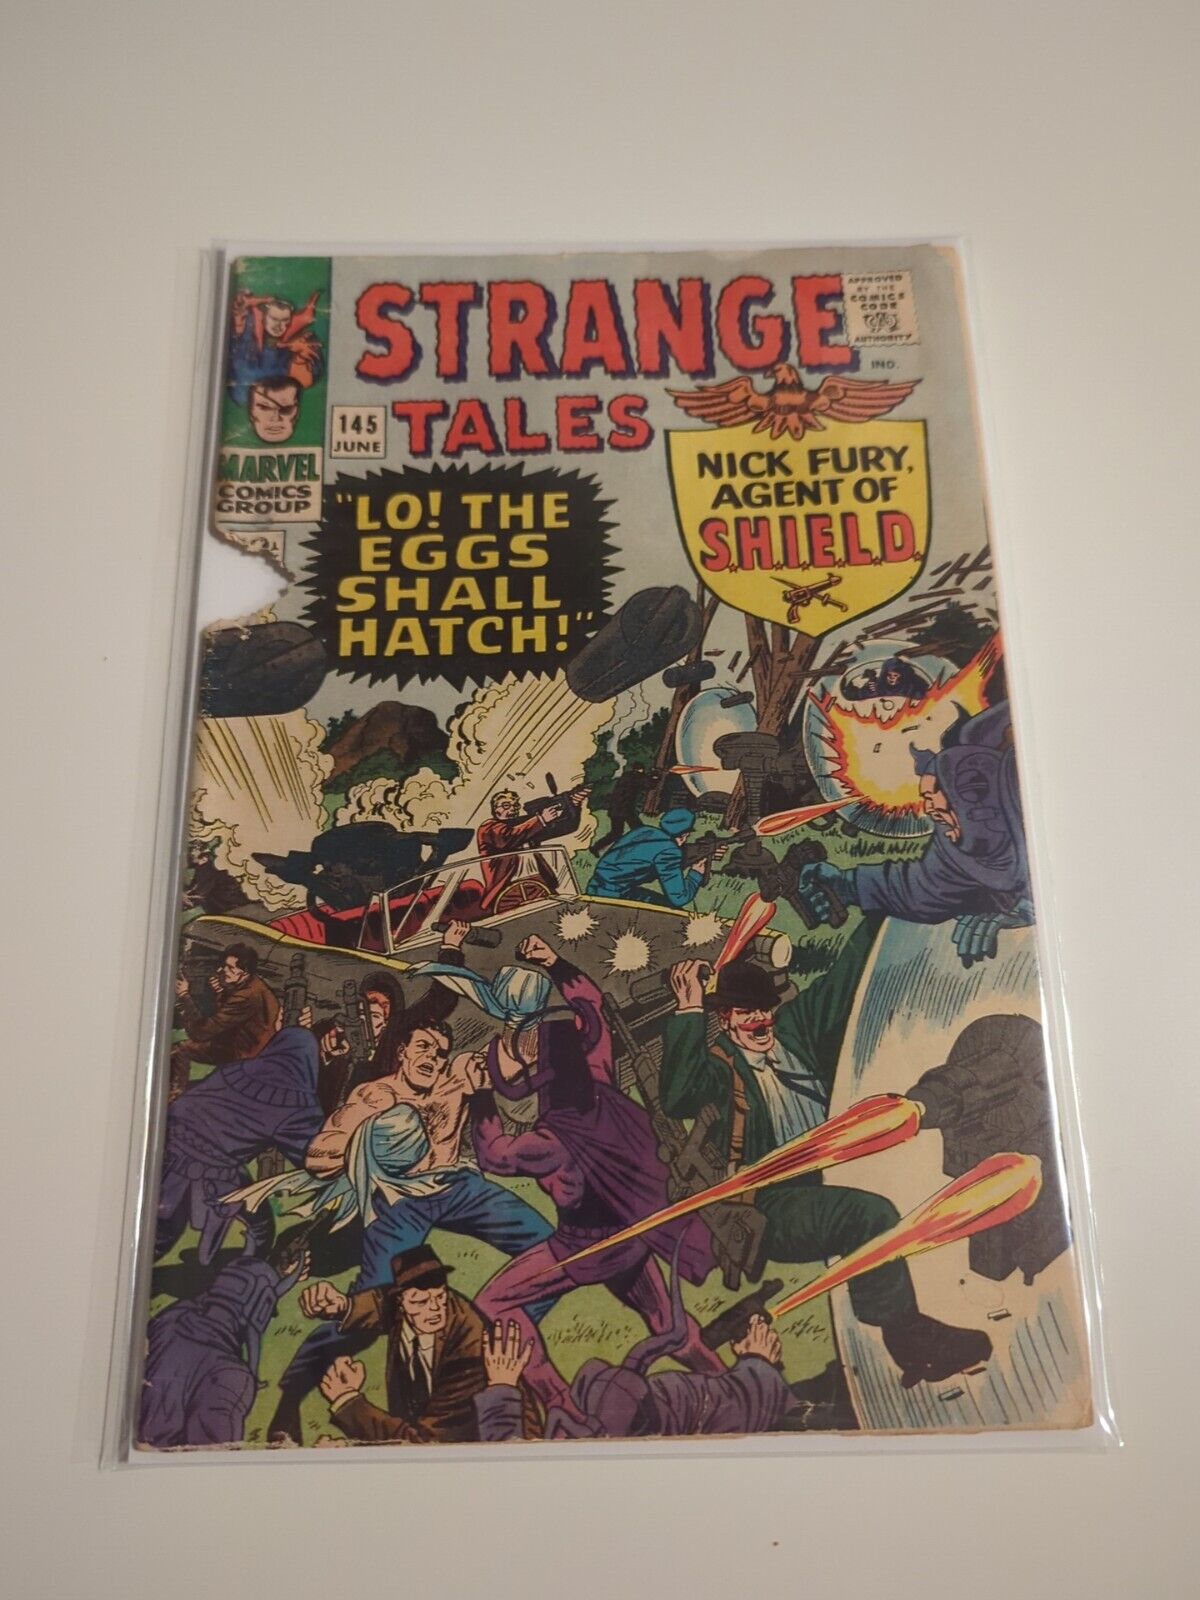 Strange Tales #155 (Marvel Comics April 1967)